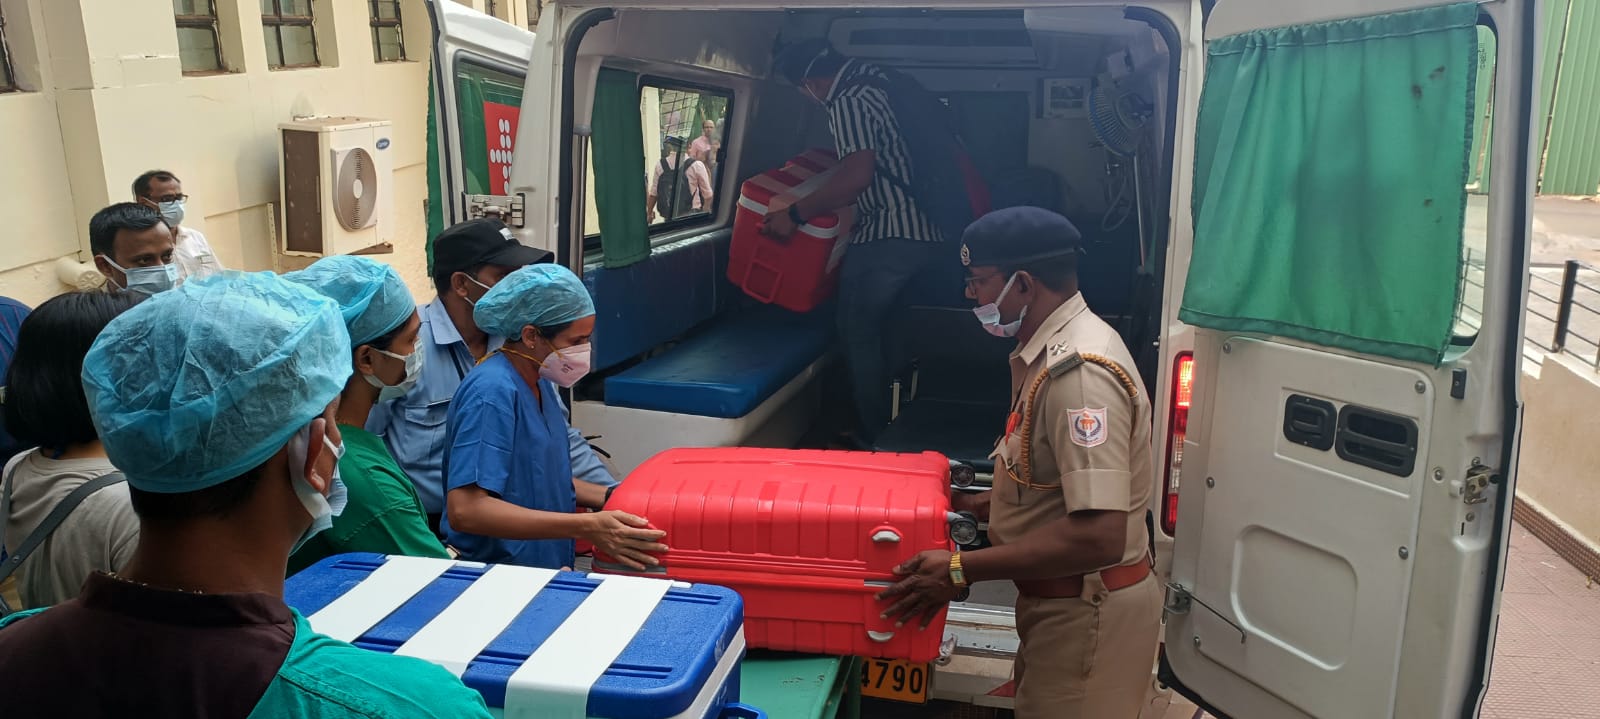 Brahmavar accident victim gives life through organ donation - The ...